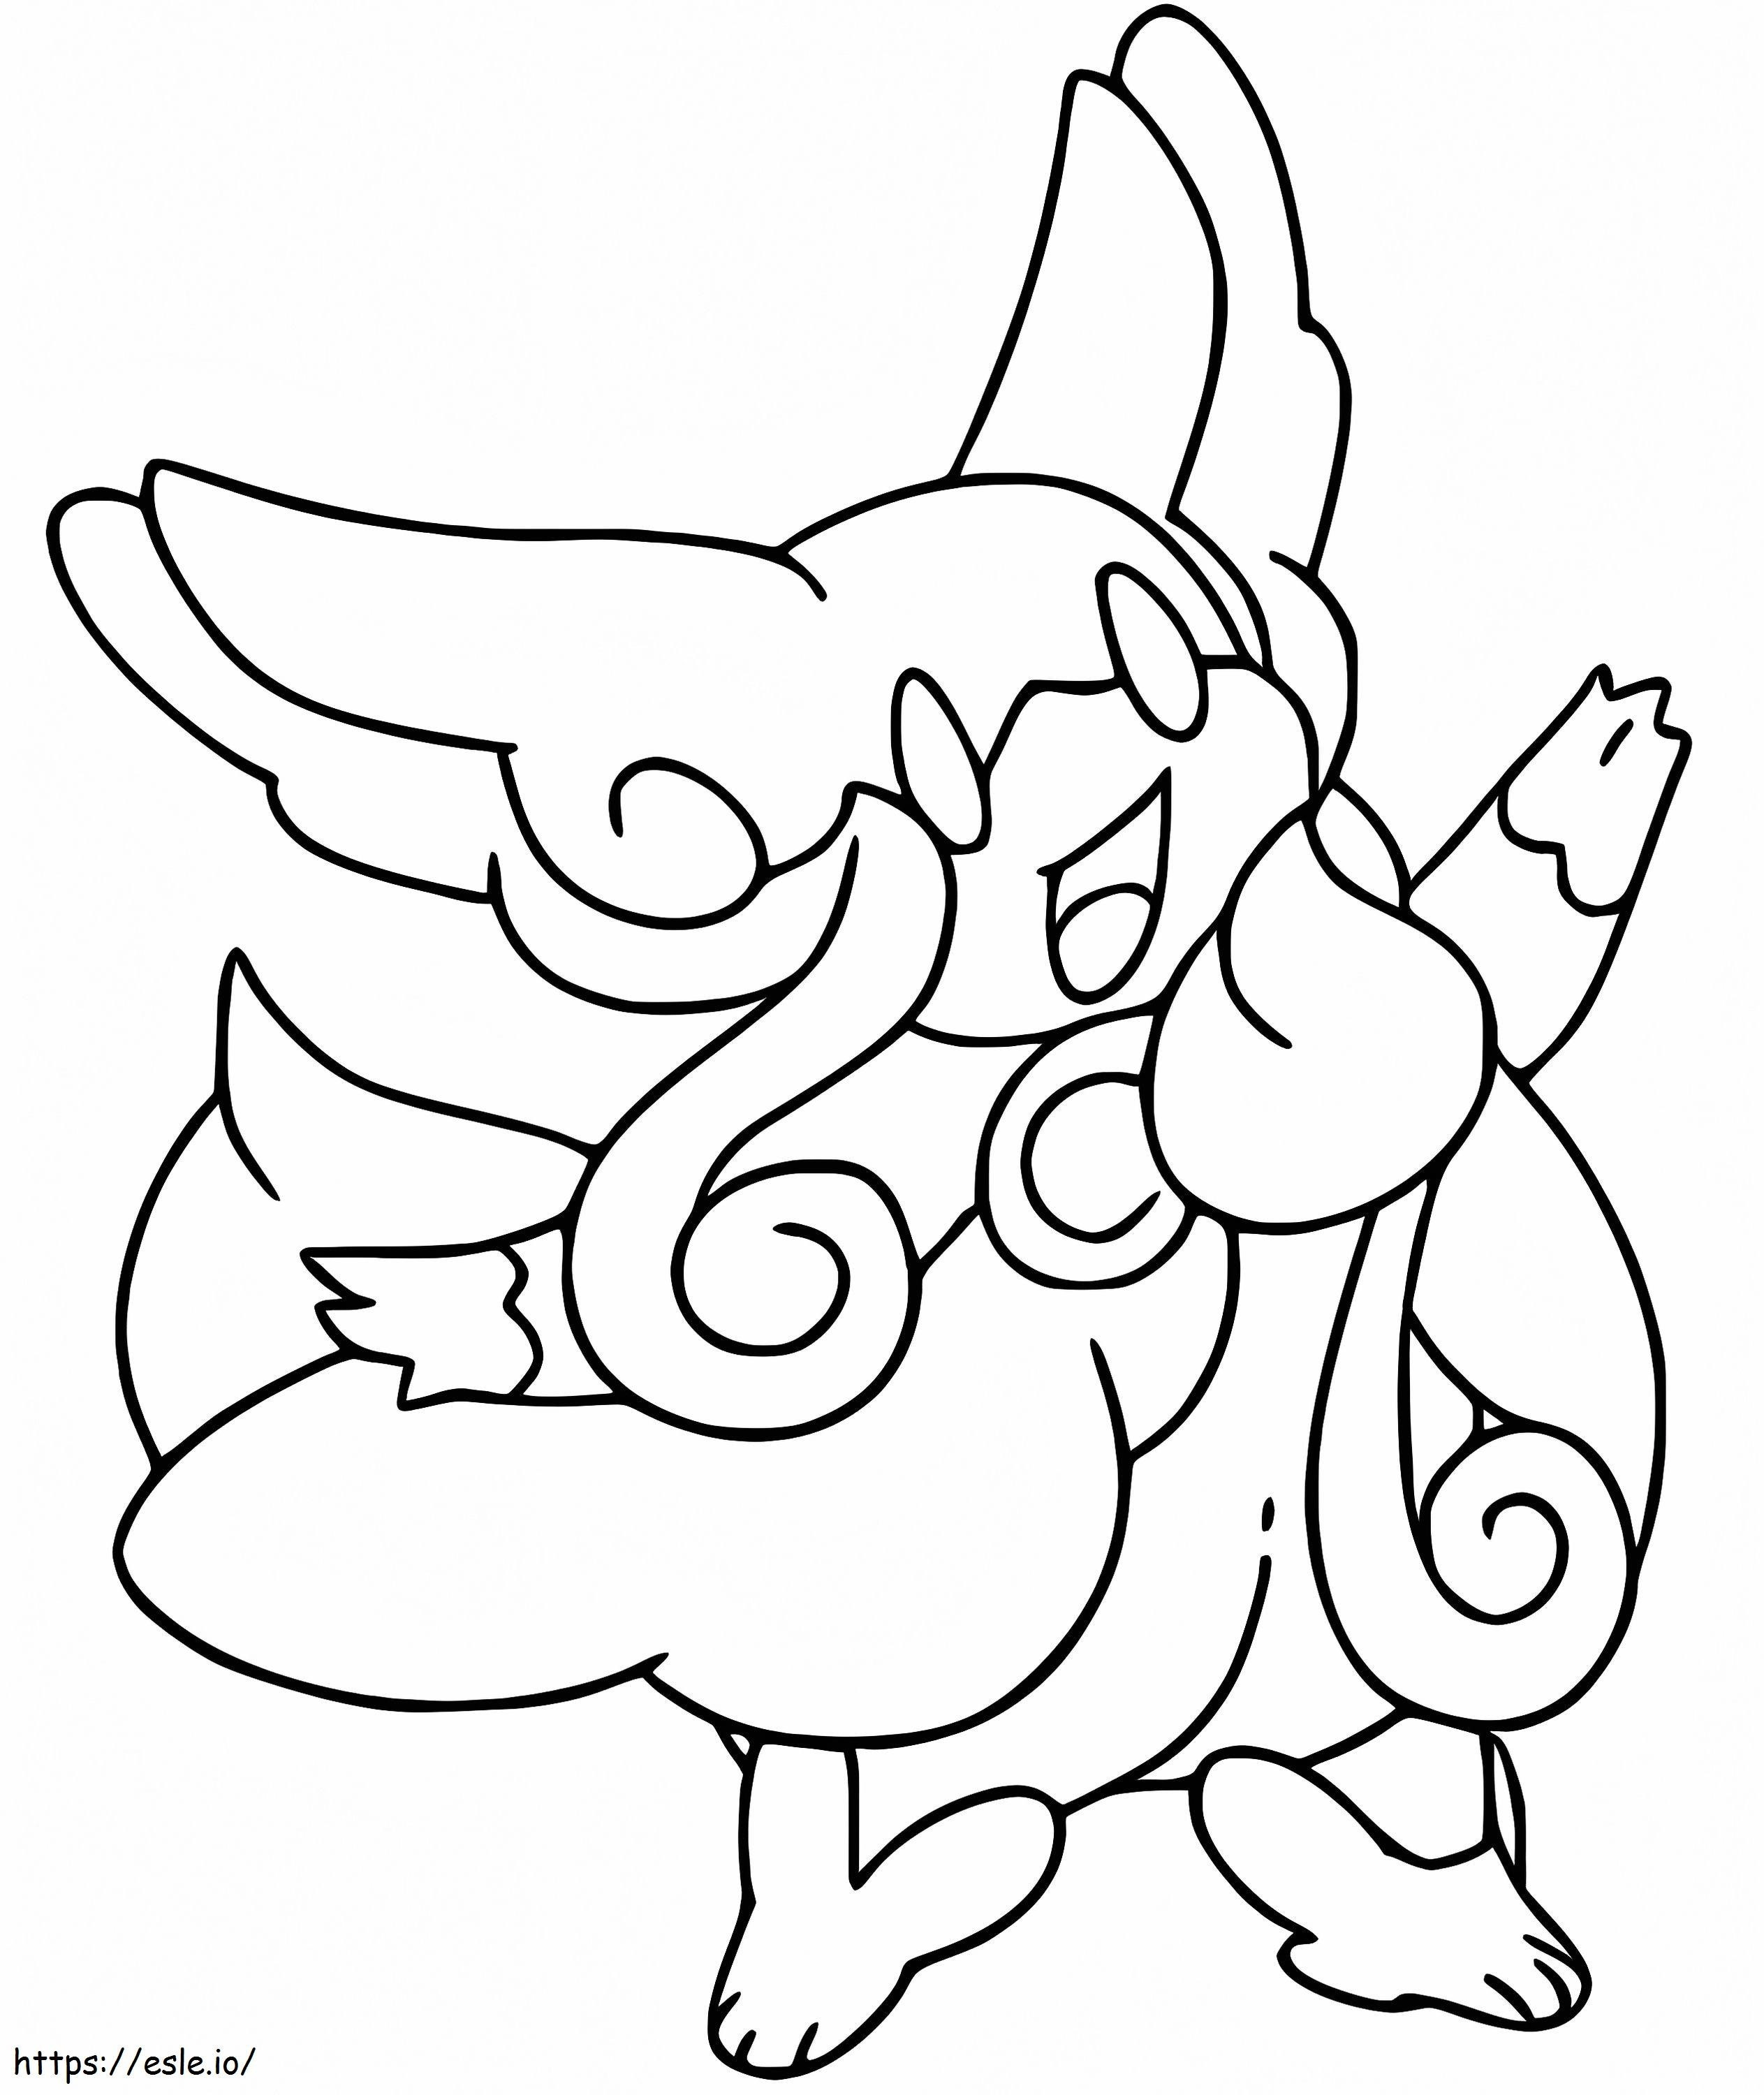 Coloriage Pokémon Méga Audino Gen 5 à imprimer dessin